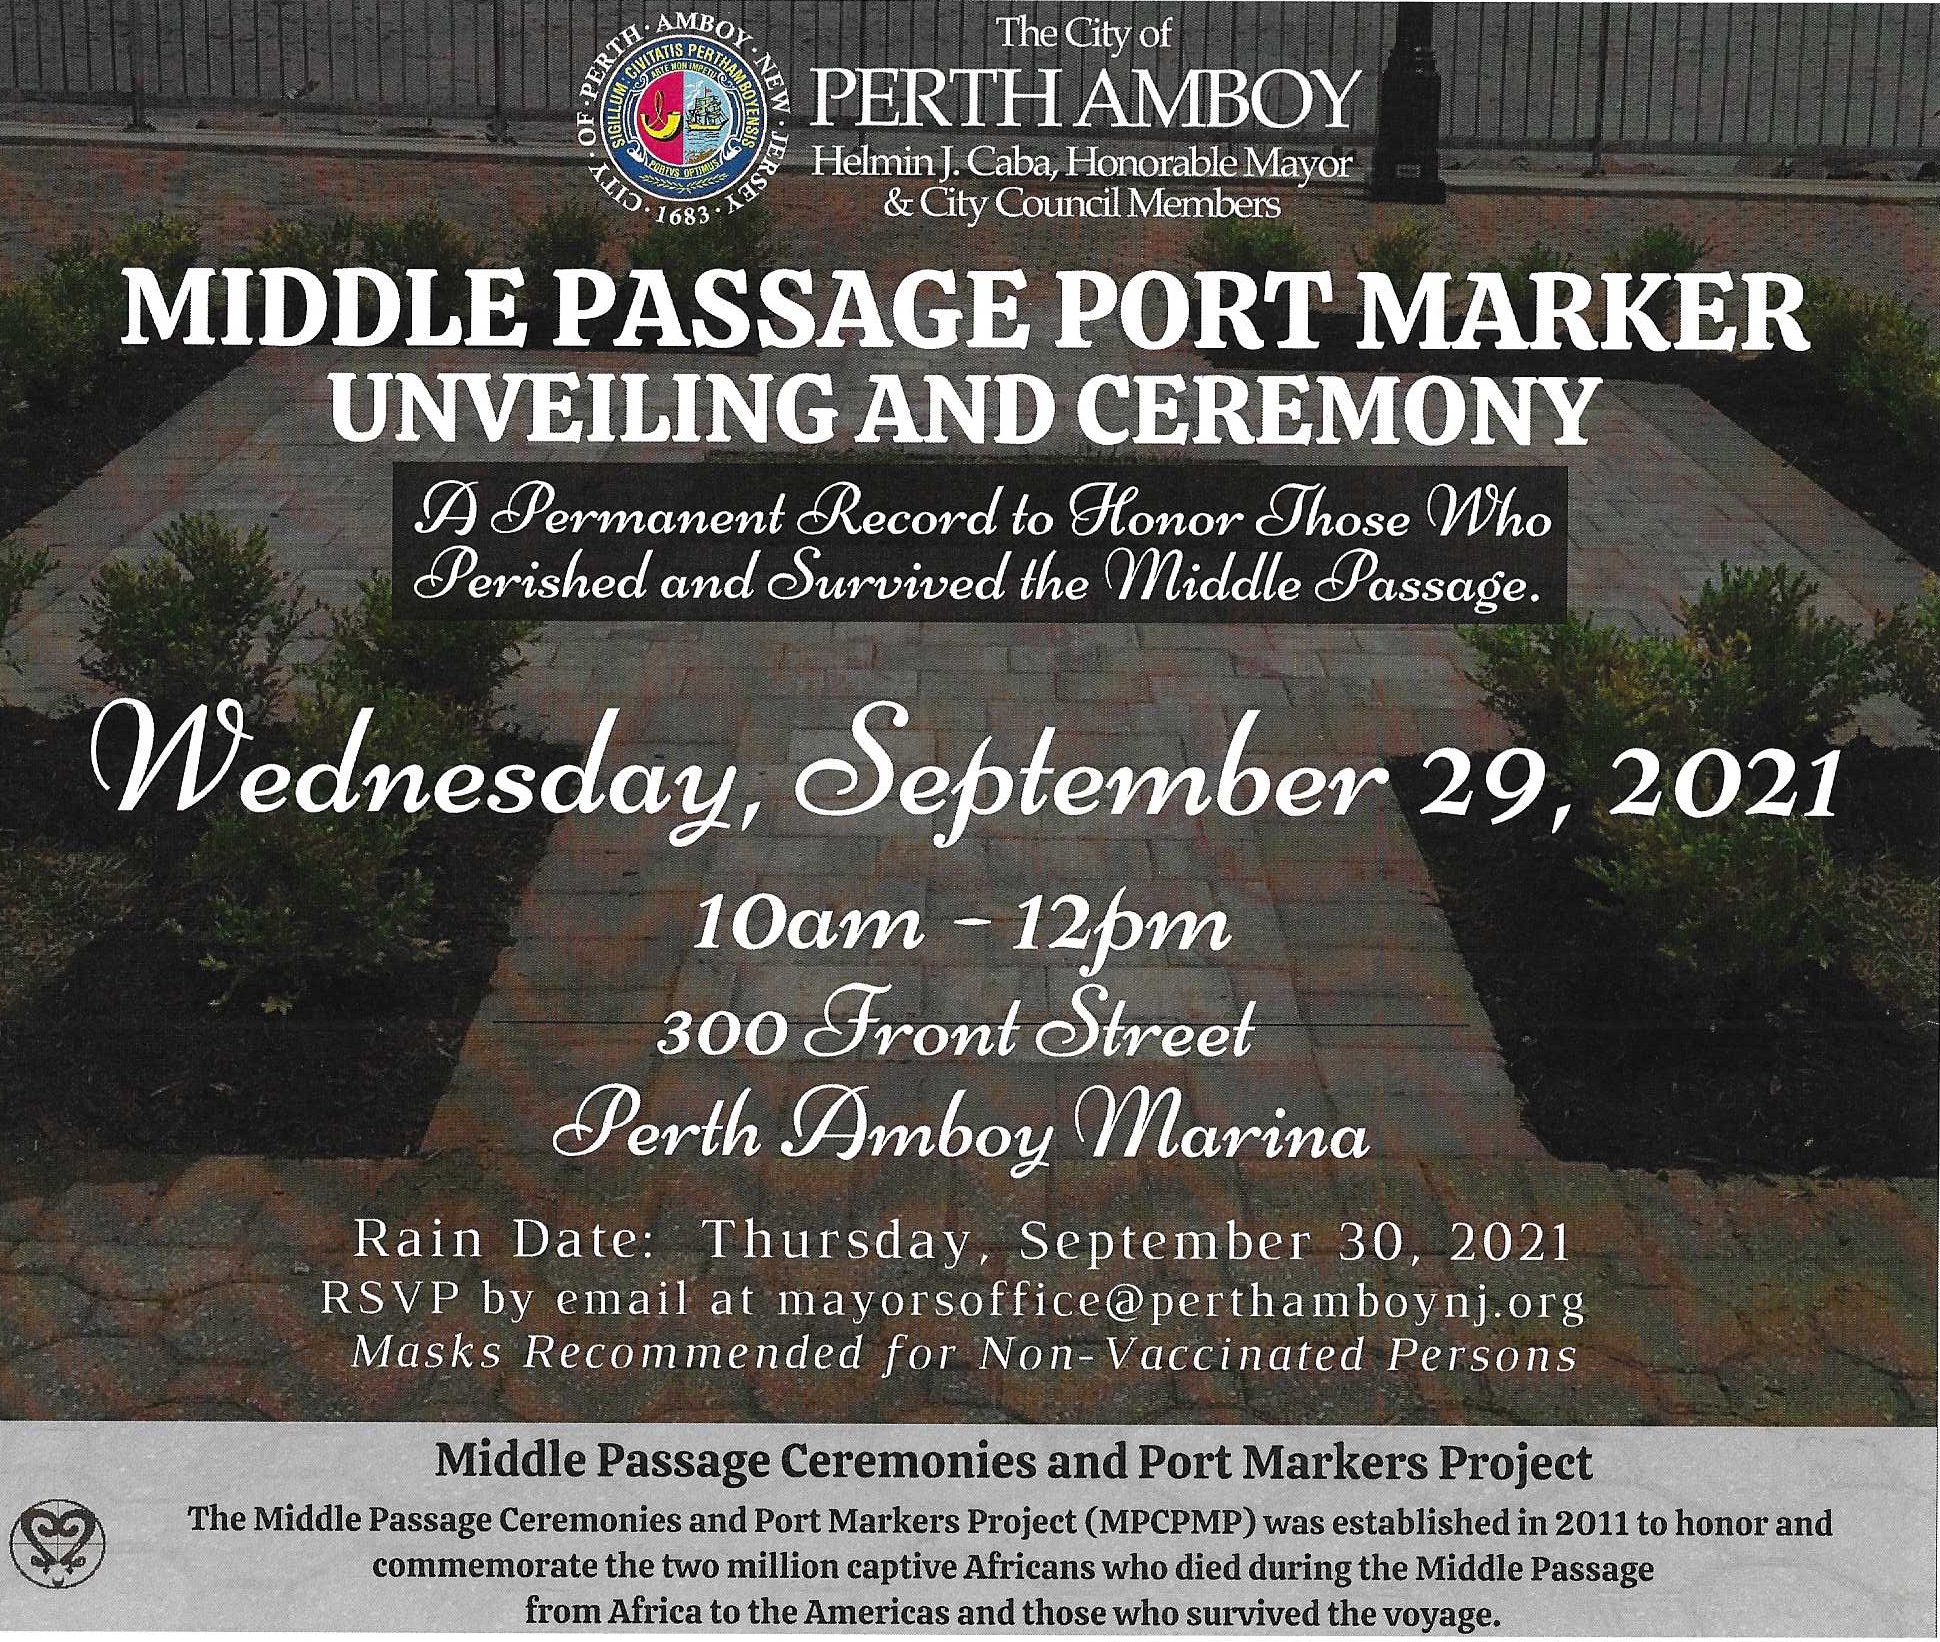 Middle Passage Marker Perth Amboy